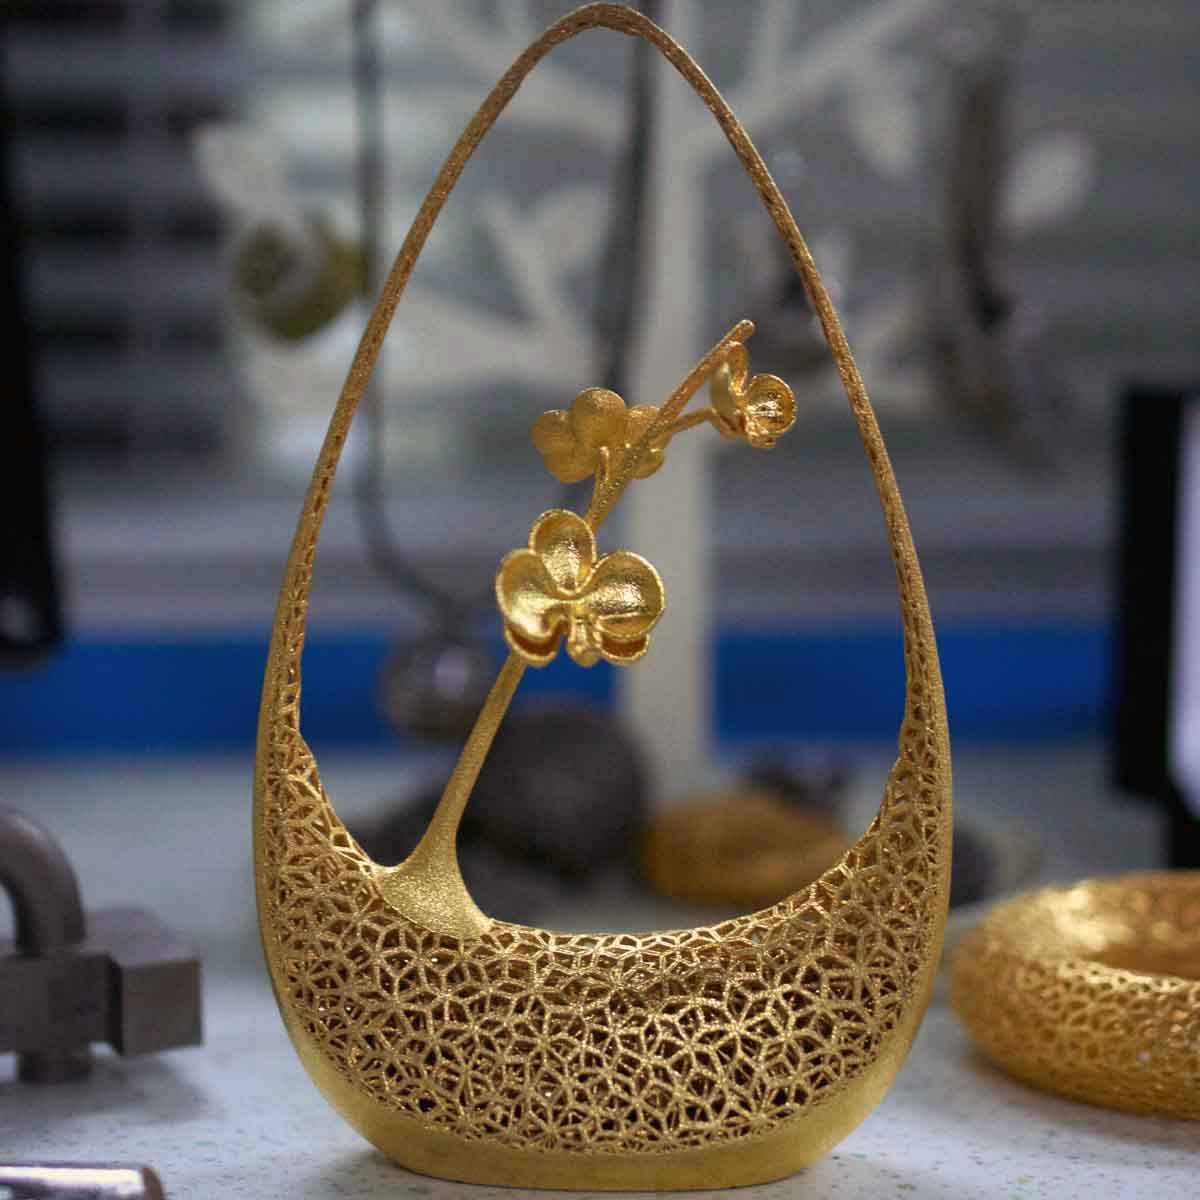 ITRI optical engine metal 3D printer 3D printed art object - ITRI Optical Engine Metal 3D Printer 3D PrinteD Art Object 1